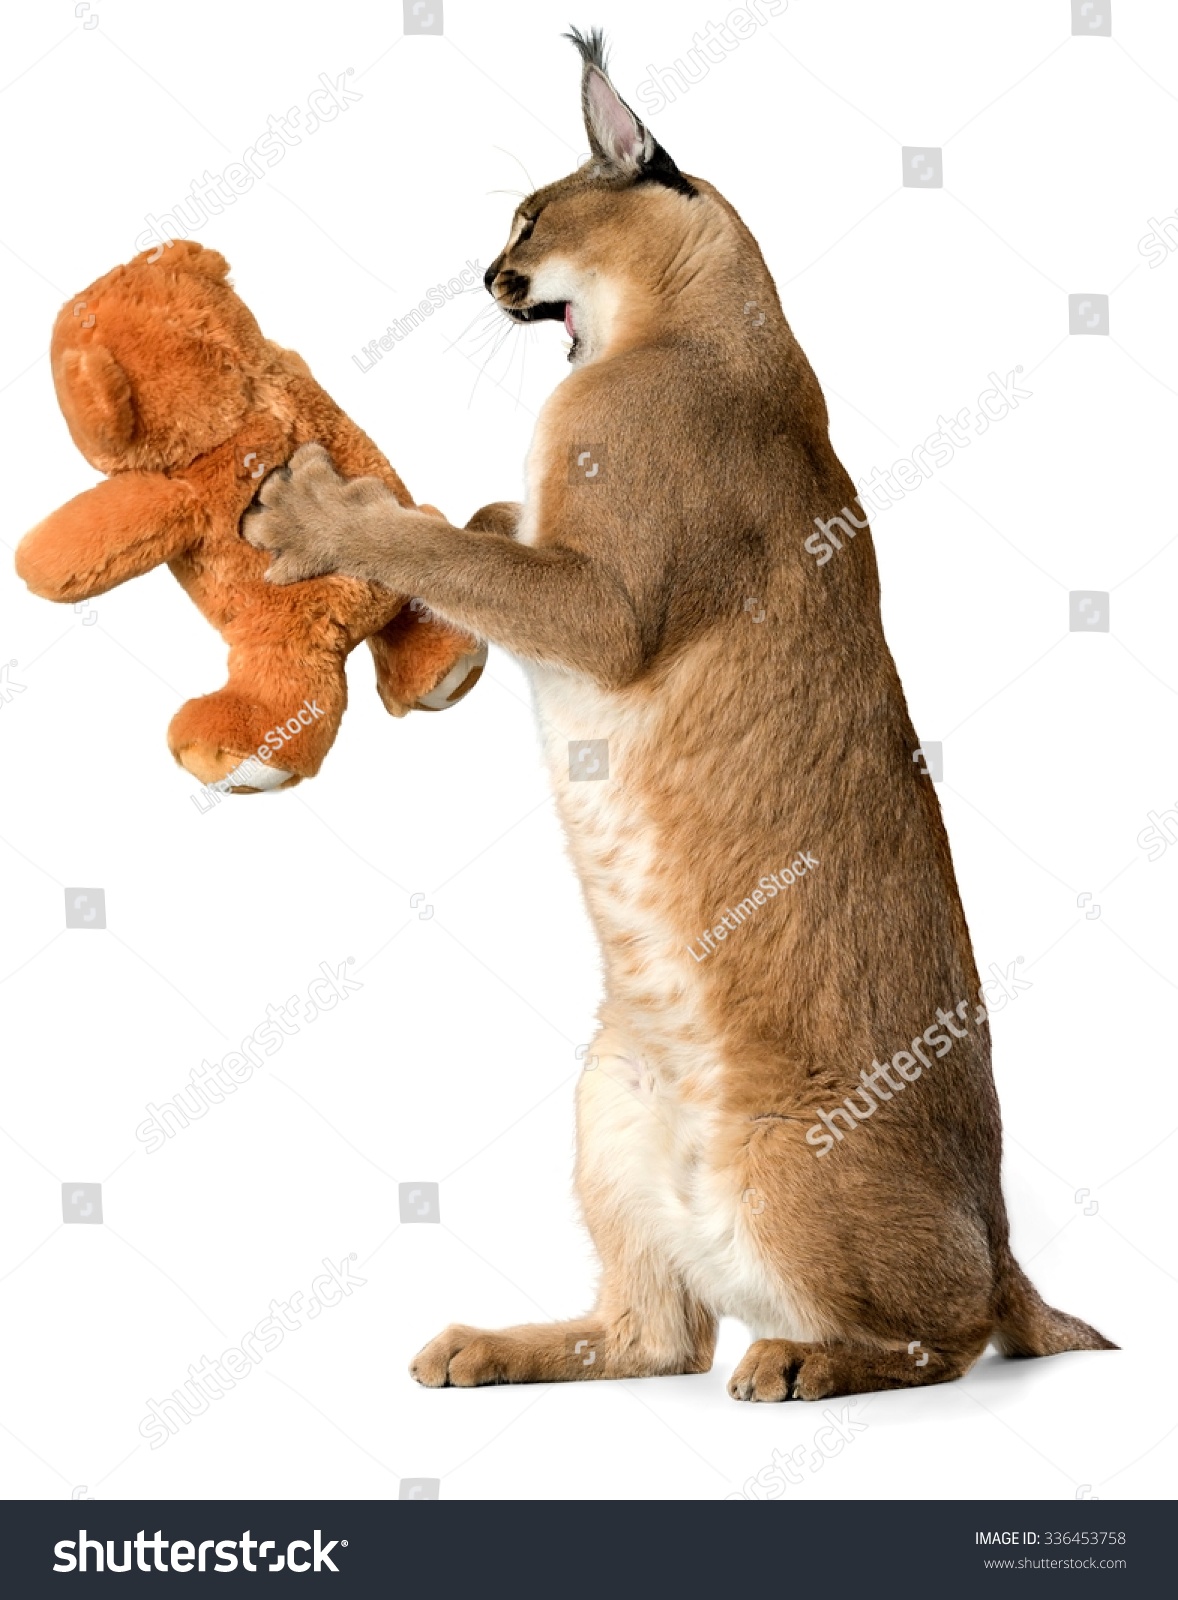 caracal stuffed animal